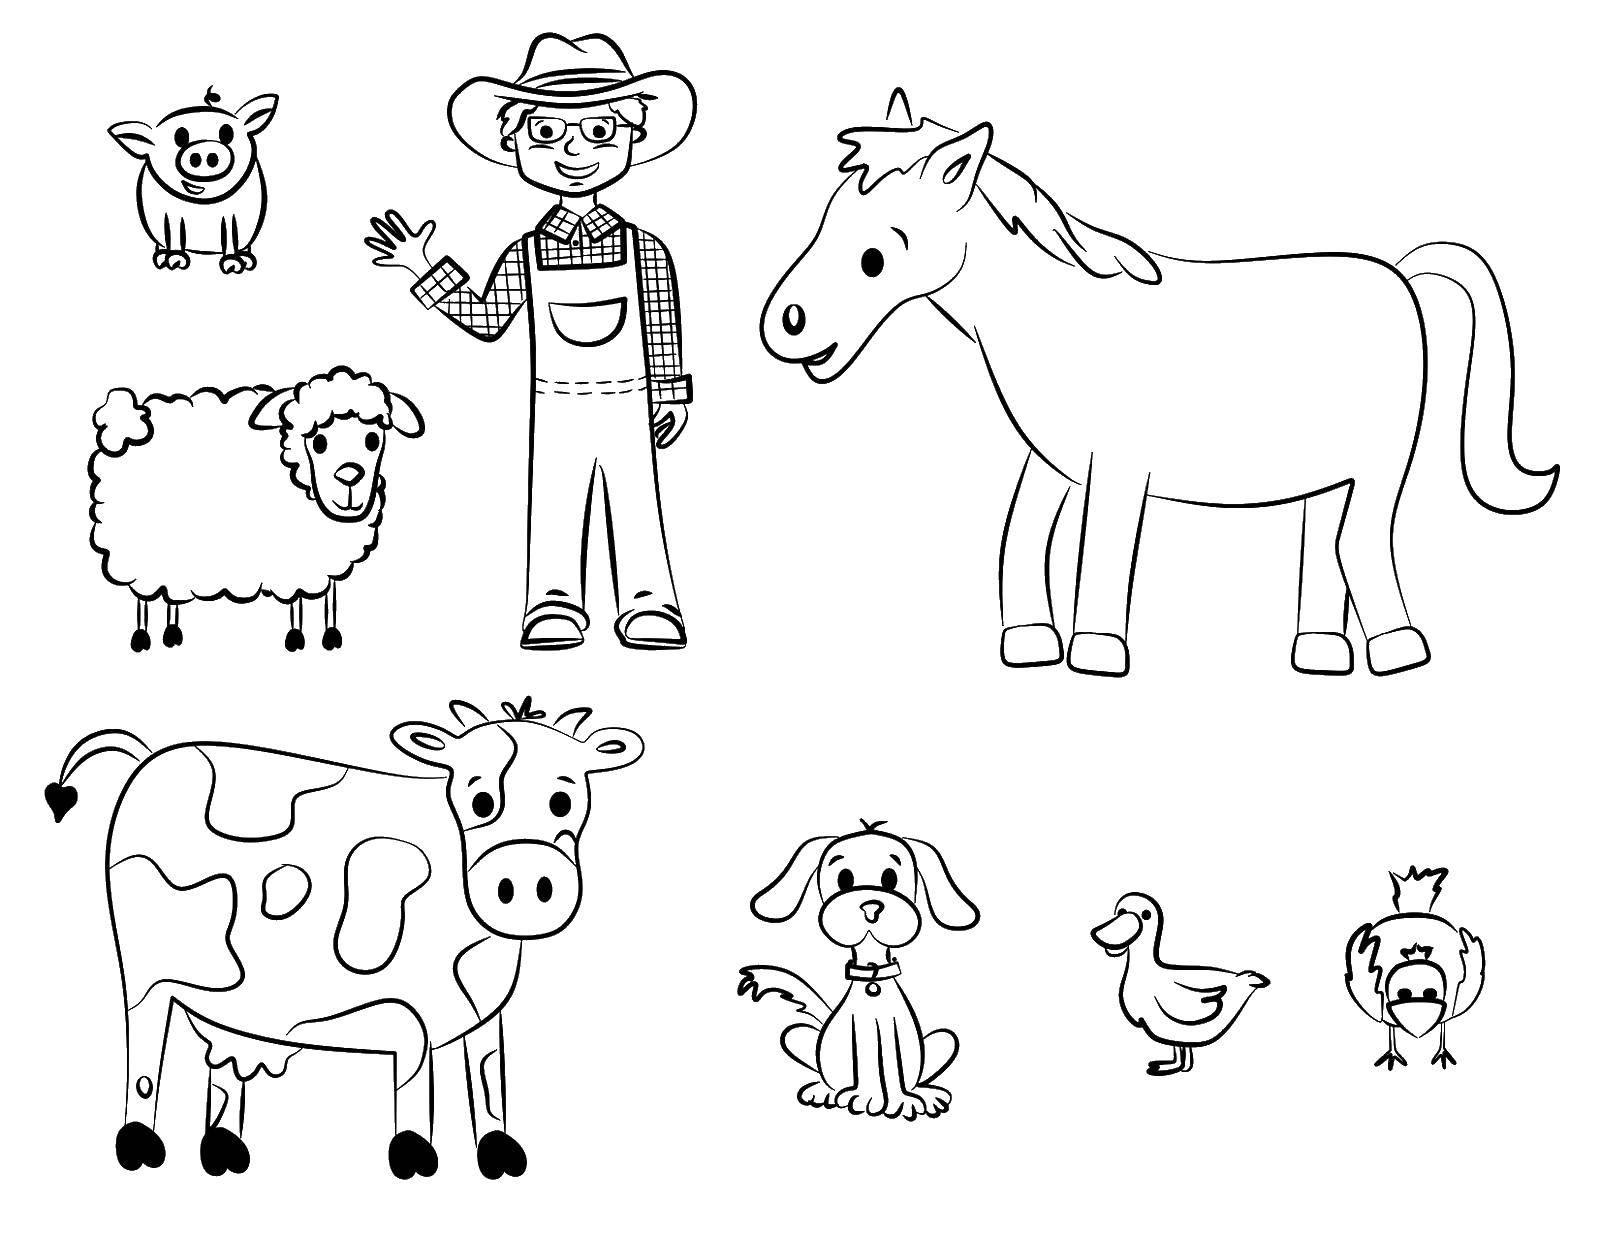 Coloring Animals on the farm. Category animals. Tags:  animal, animals, farm, farmer.